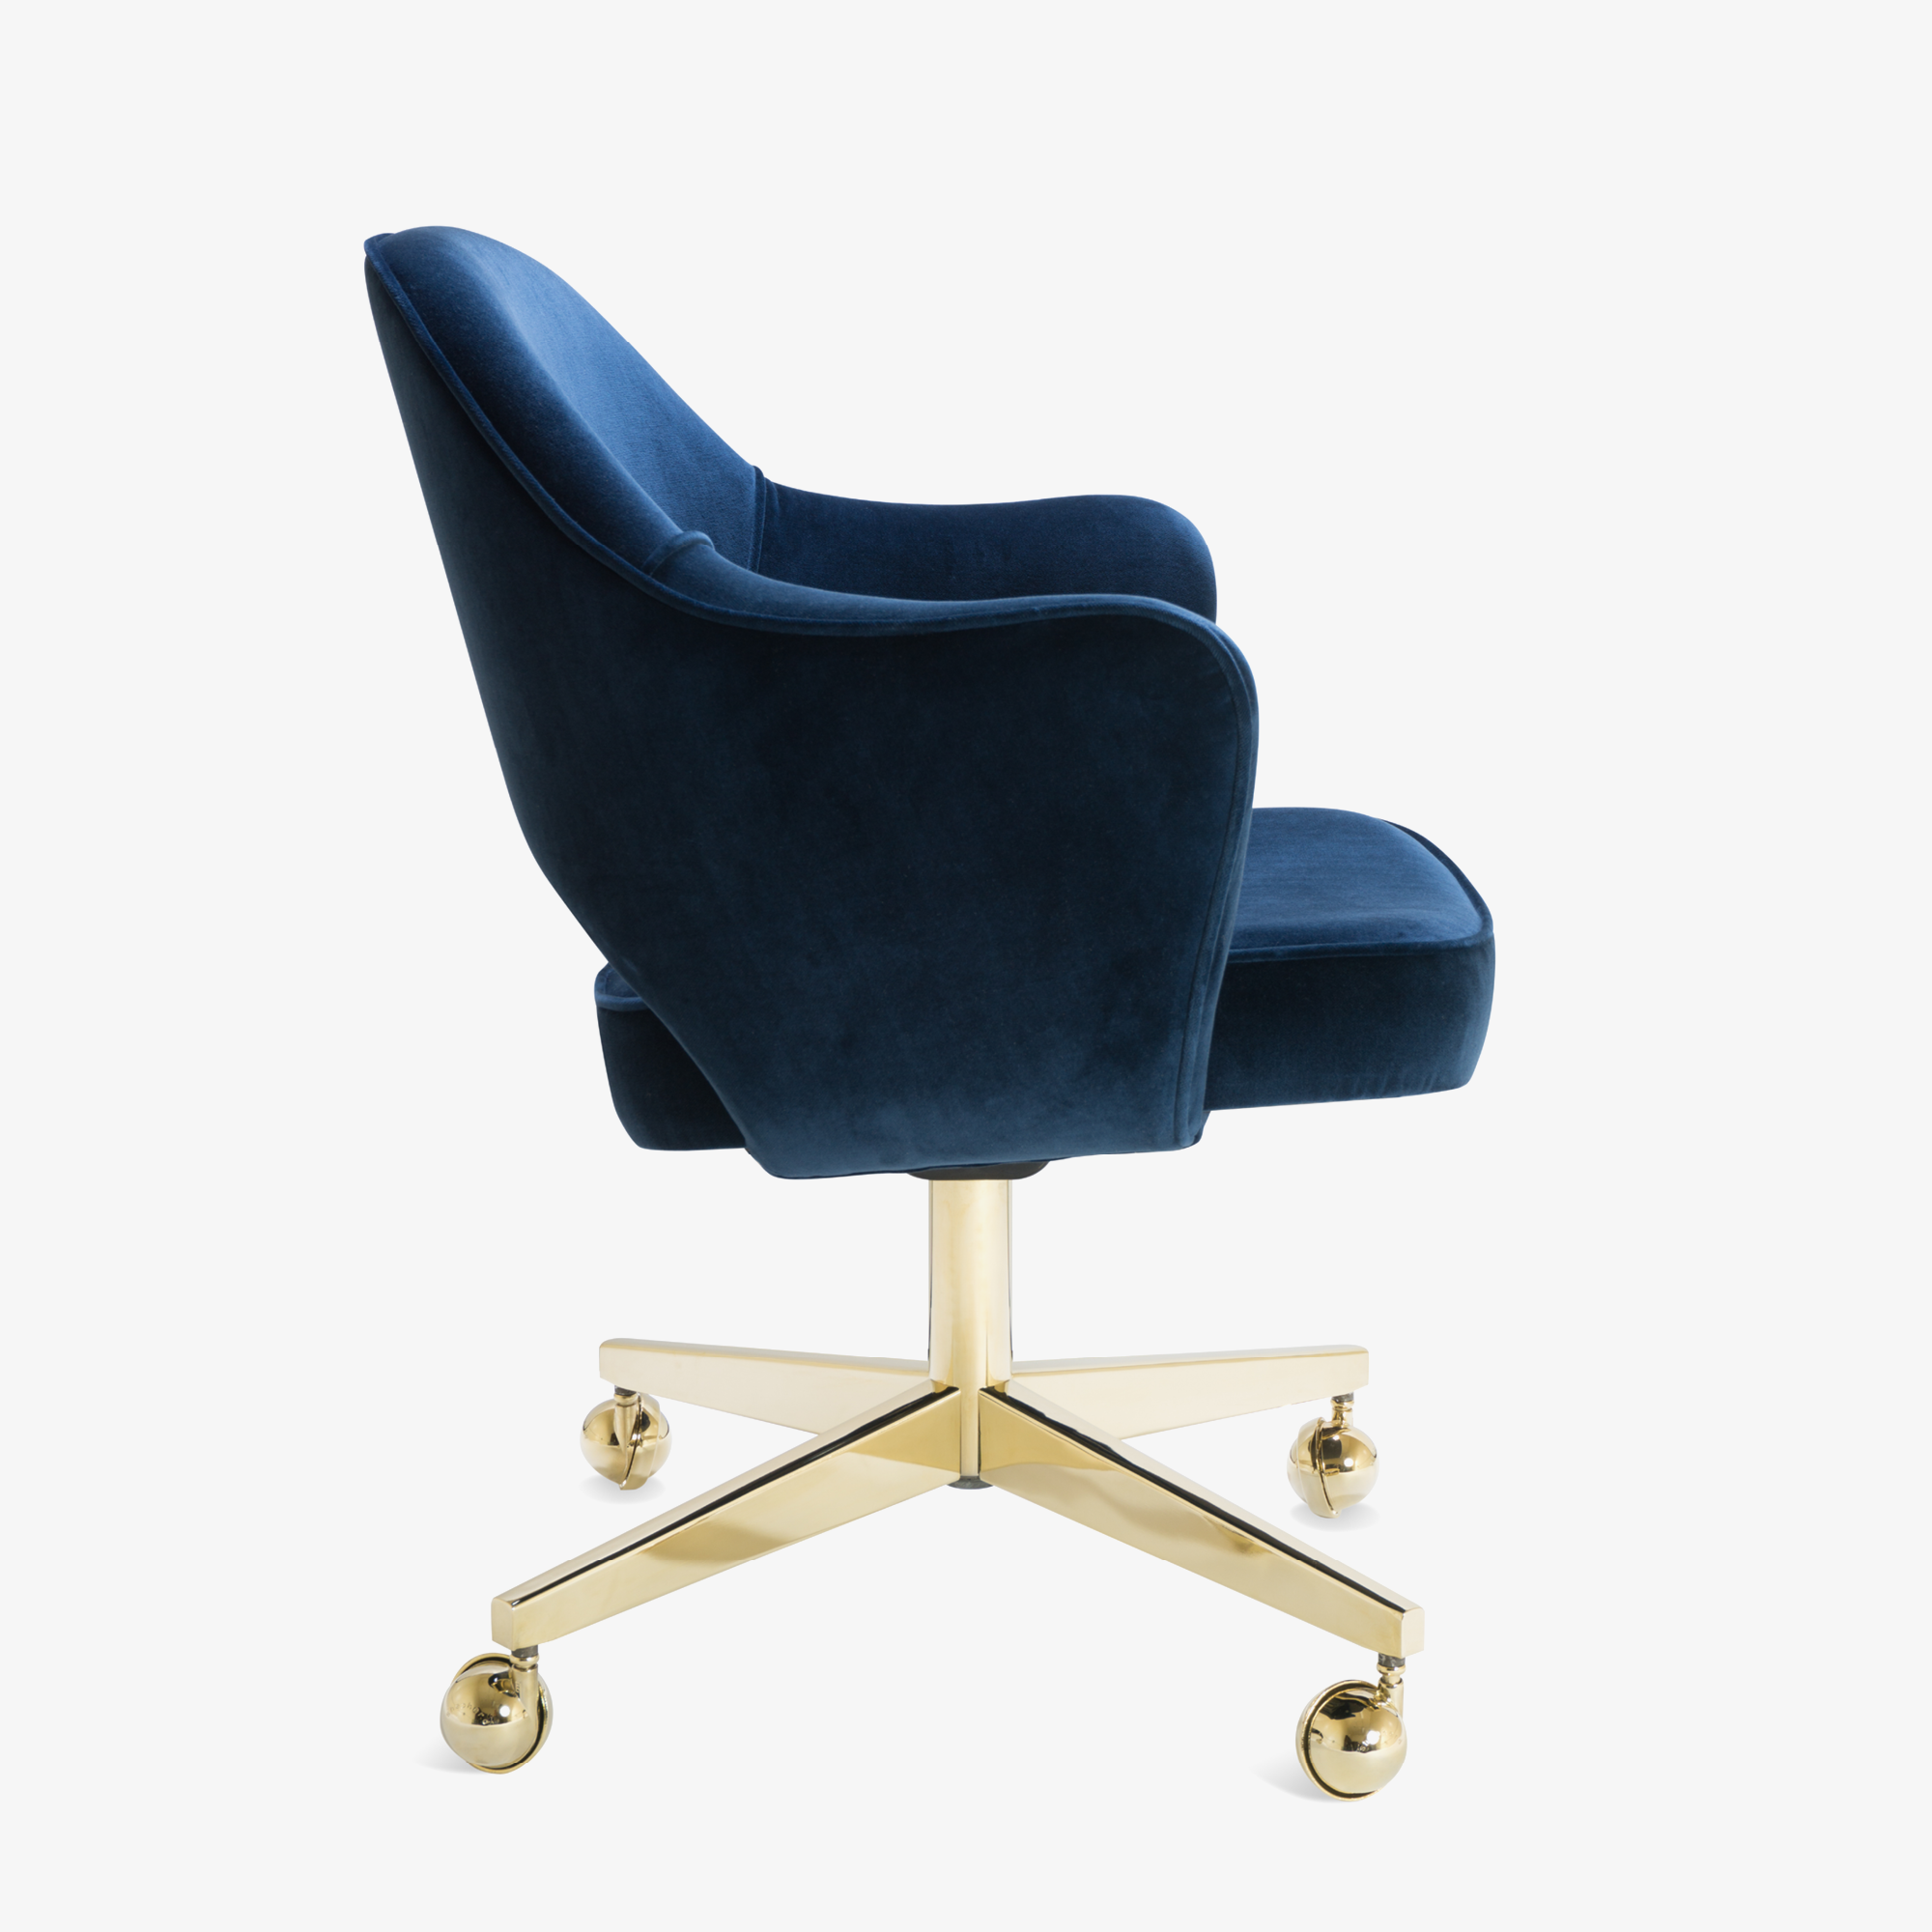 Saarinen Executive Arm Chair in Navy Velvet, Swivel Base, 24k Gold Edition4.png